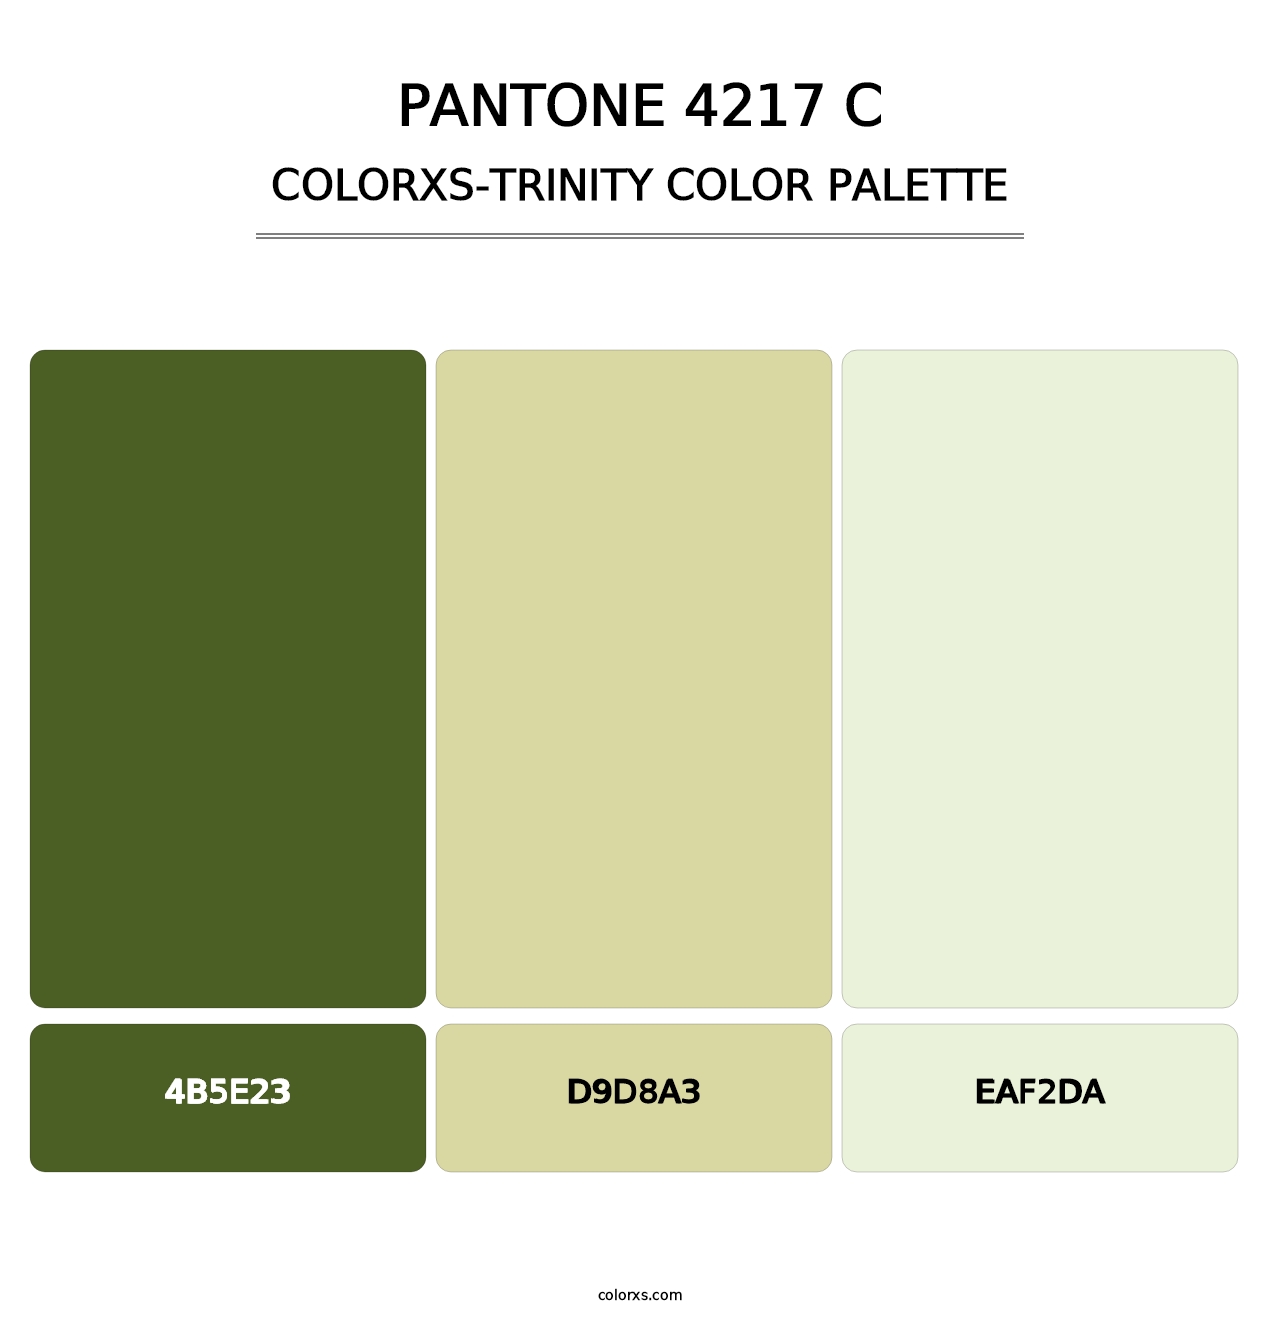 PANTONE 4217 C - Colorxs Trinity Palette